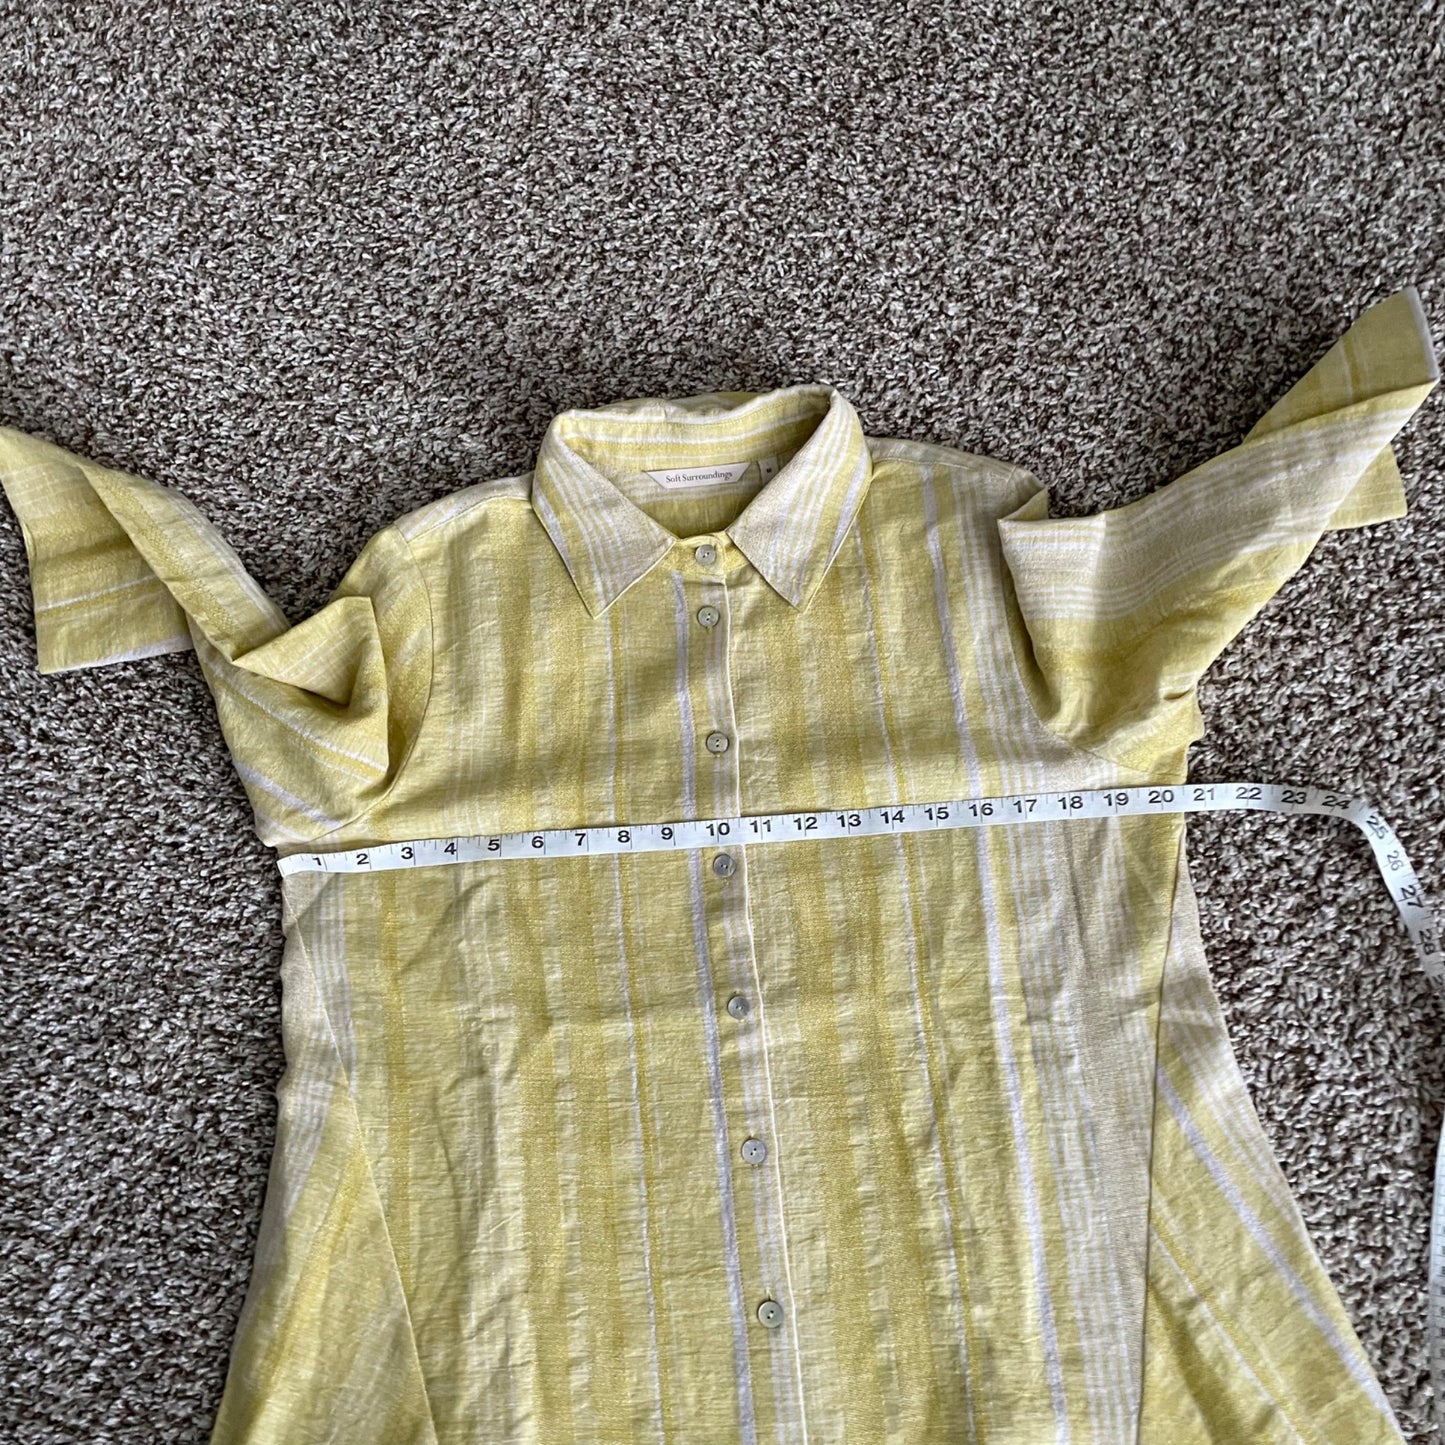 NWOT Soft Surroundings Livienne Linen Yellow Striped Shirt Women's Size Medium